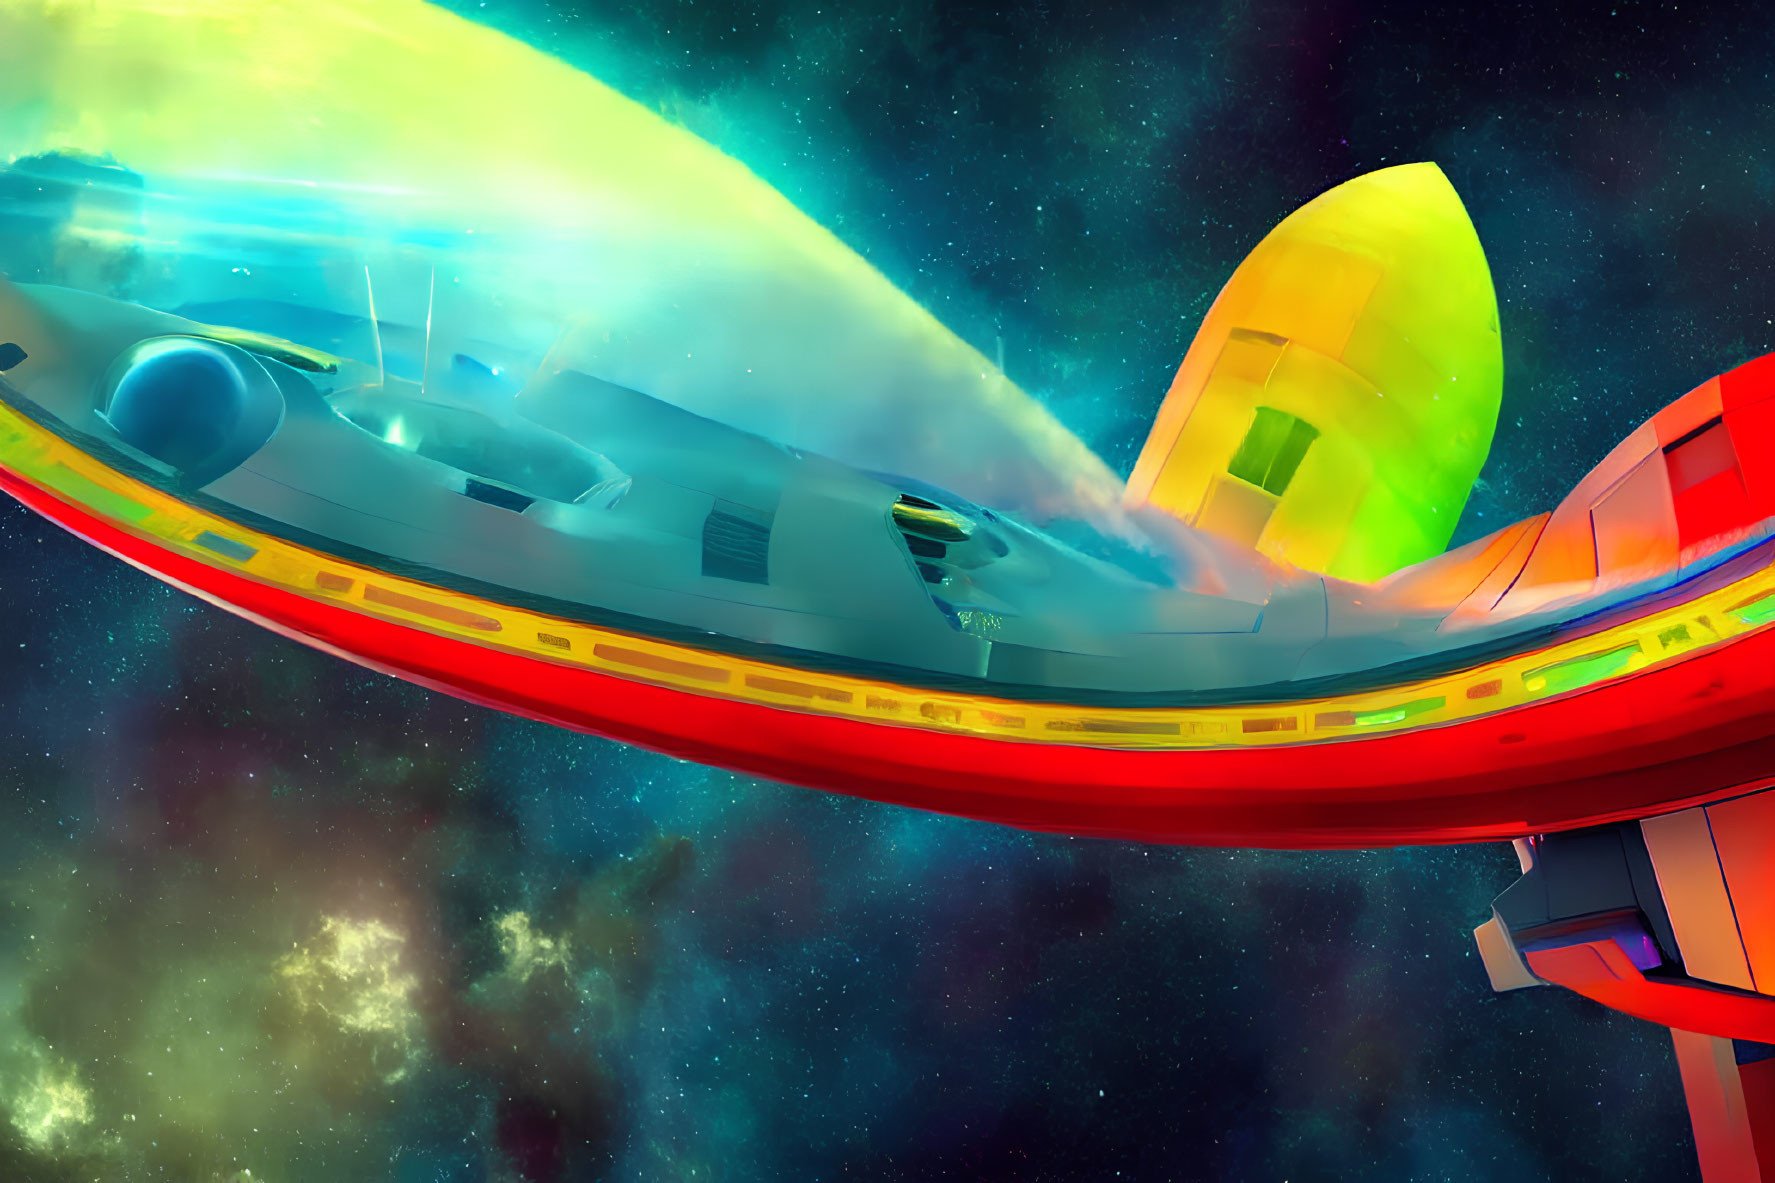 Futuristic spaceship in colorful nebula artwork